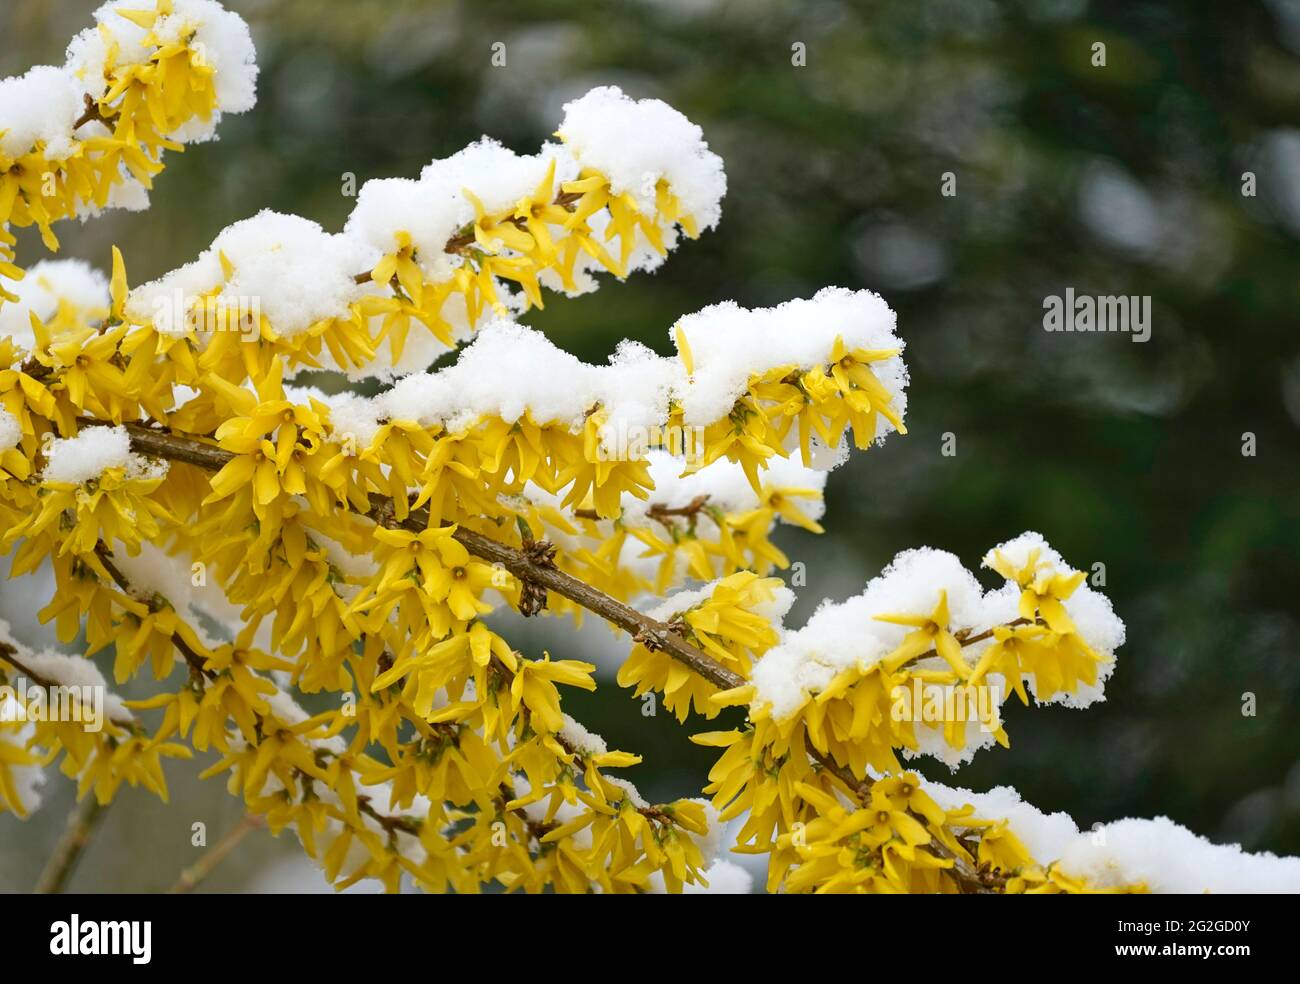 Germany, Bavaria, Upper Bavaria, shrub, forsythia, blossoms covered in snow, April weather Stock Photo